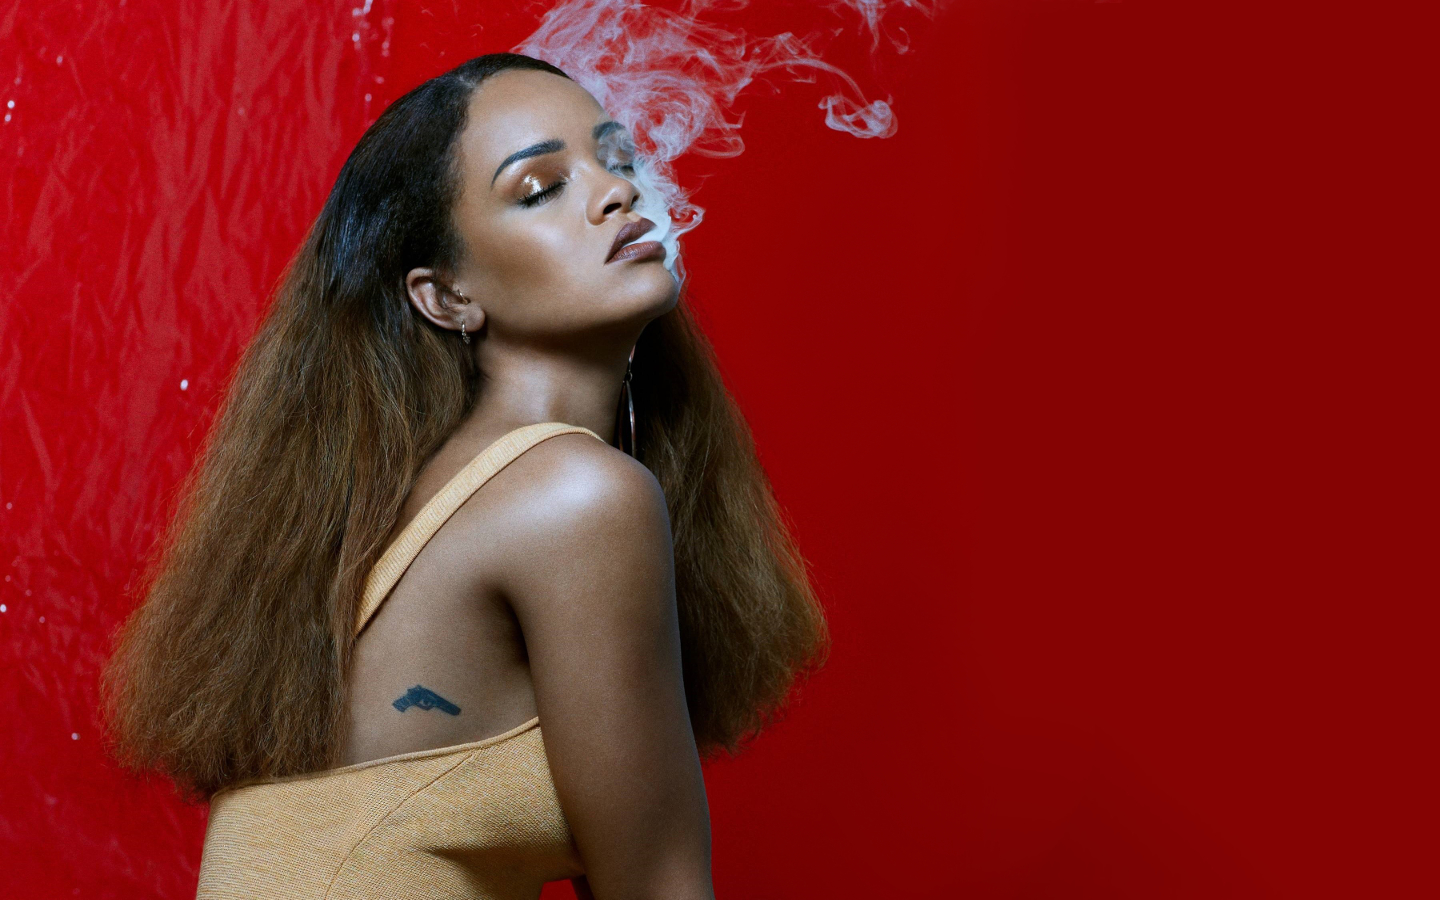 Rihanna For The Fader Magazine - Rihanna Smoking Weed Photoshoot - HD Wallpaper 